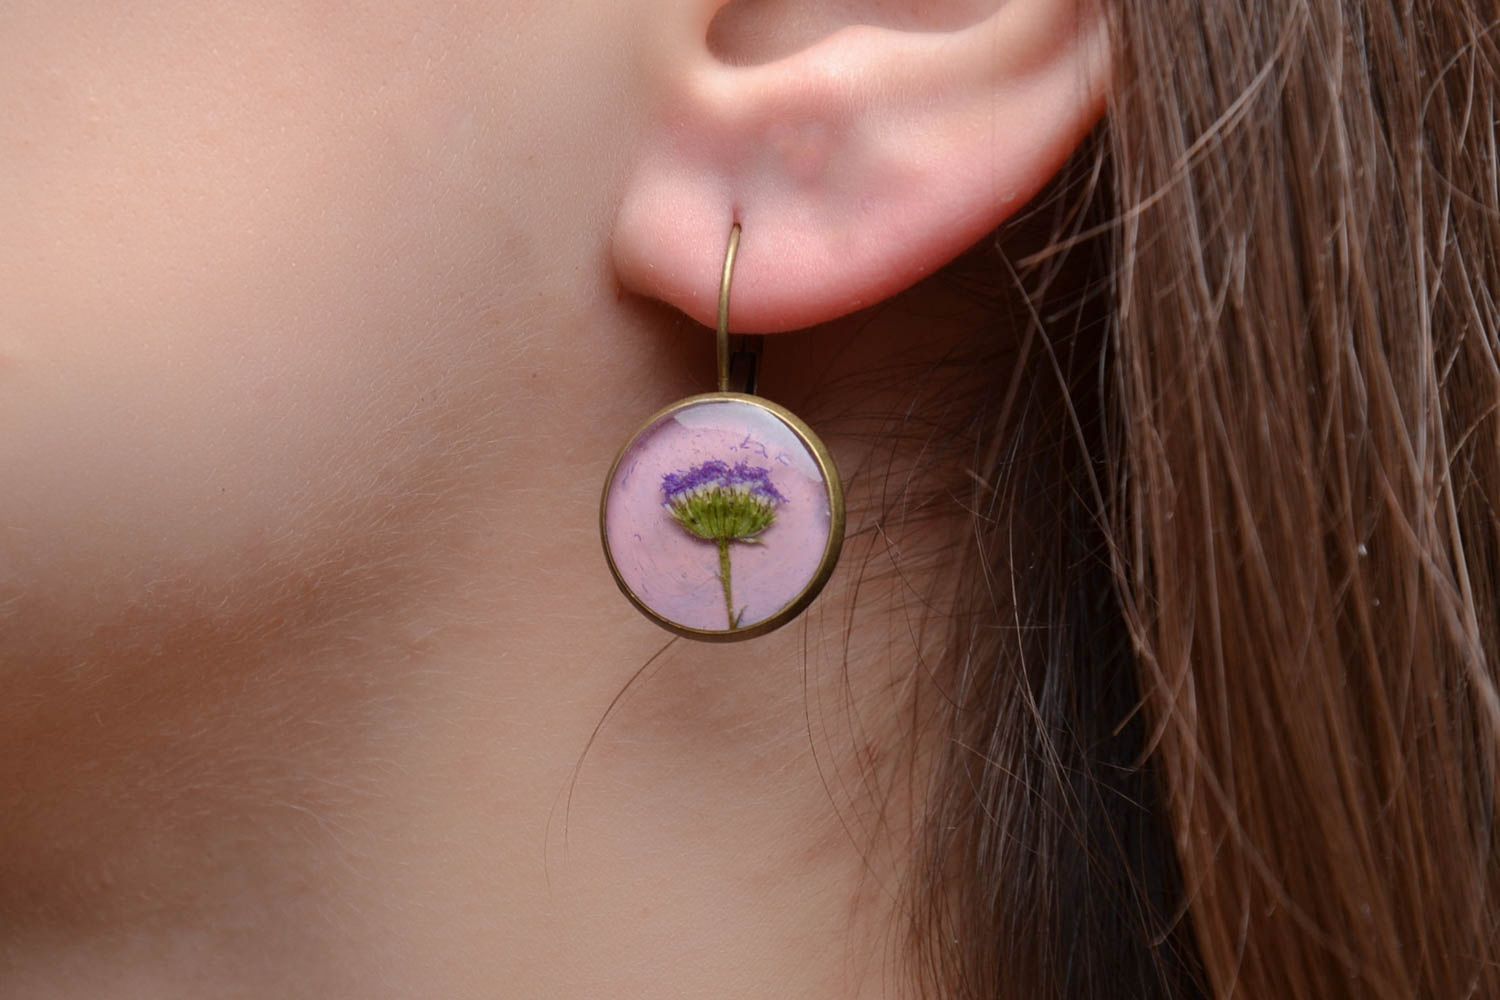 Botanical earrings in vintage style photo 2